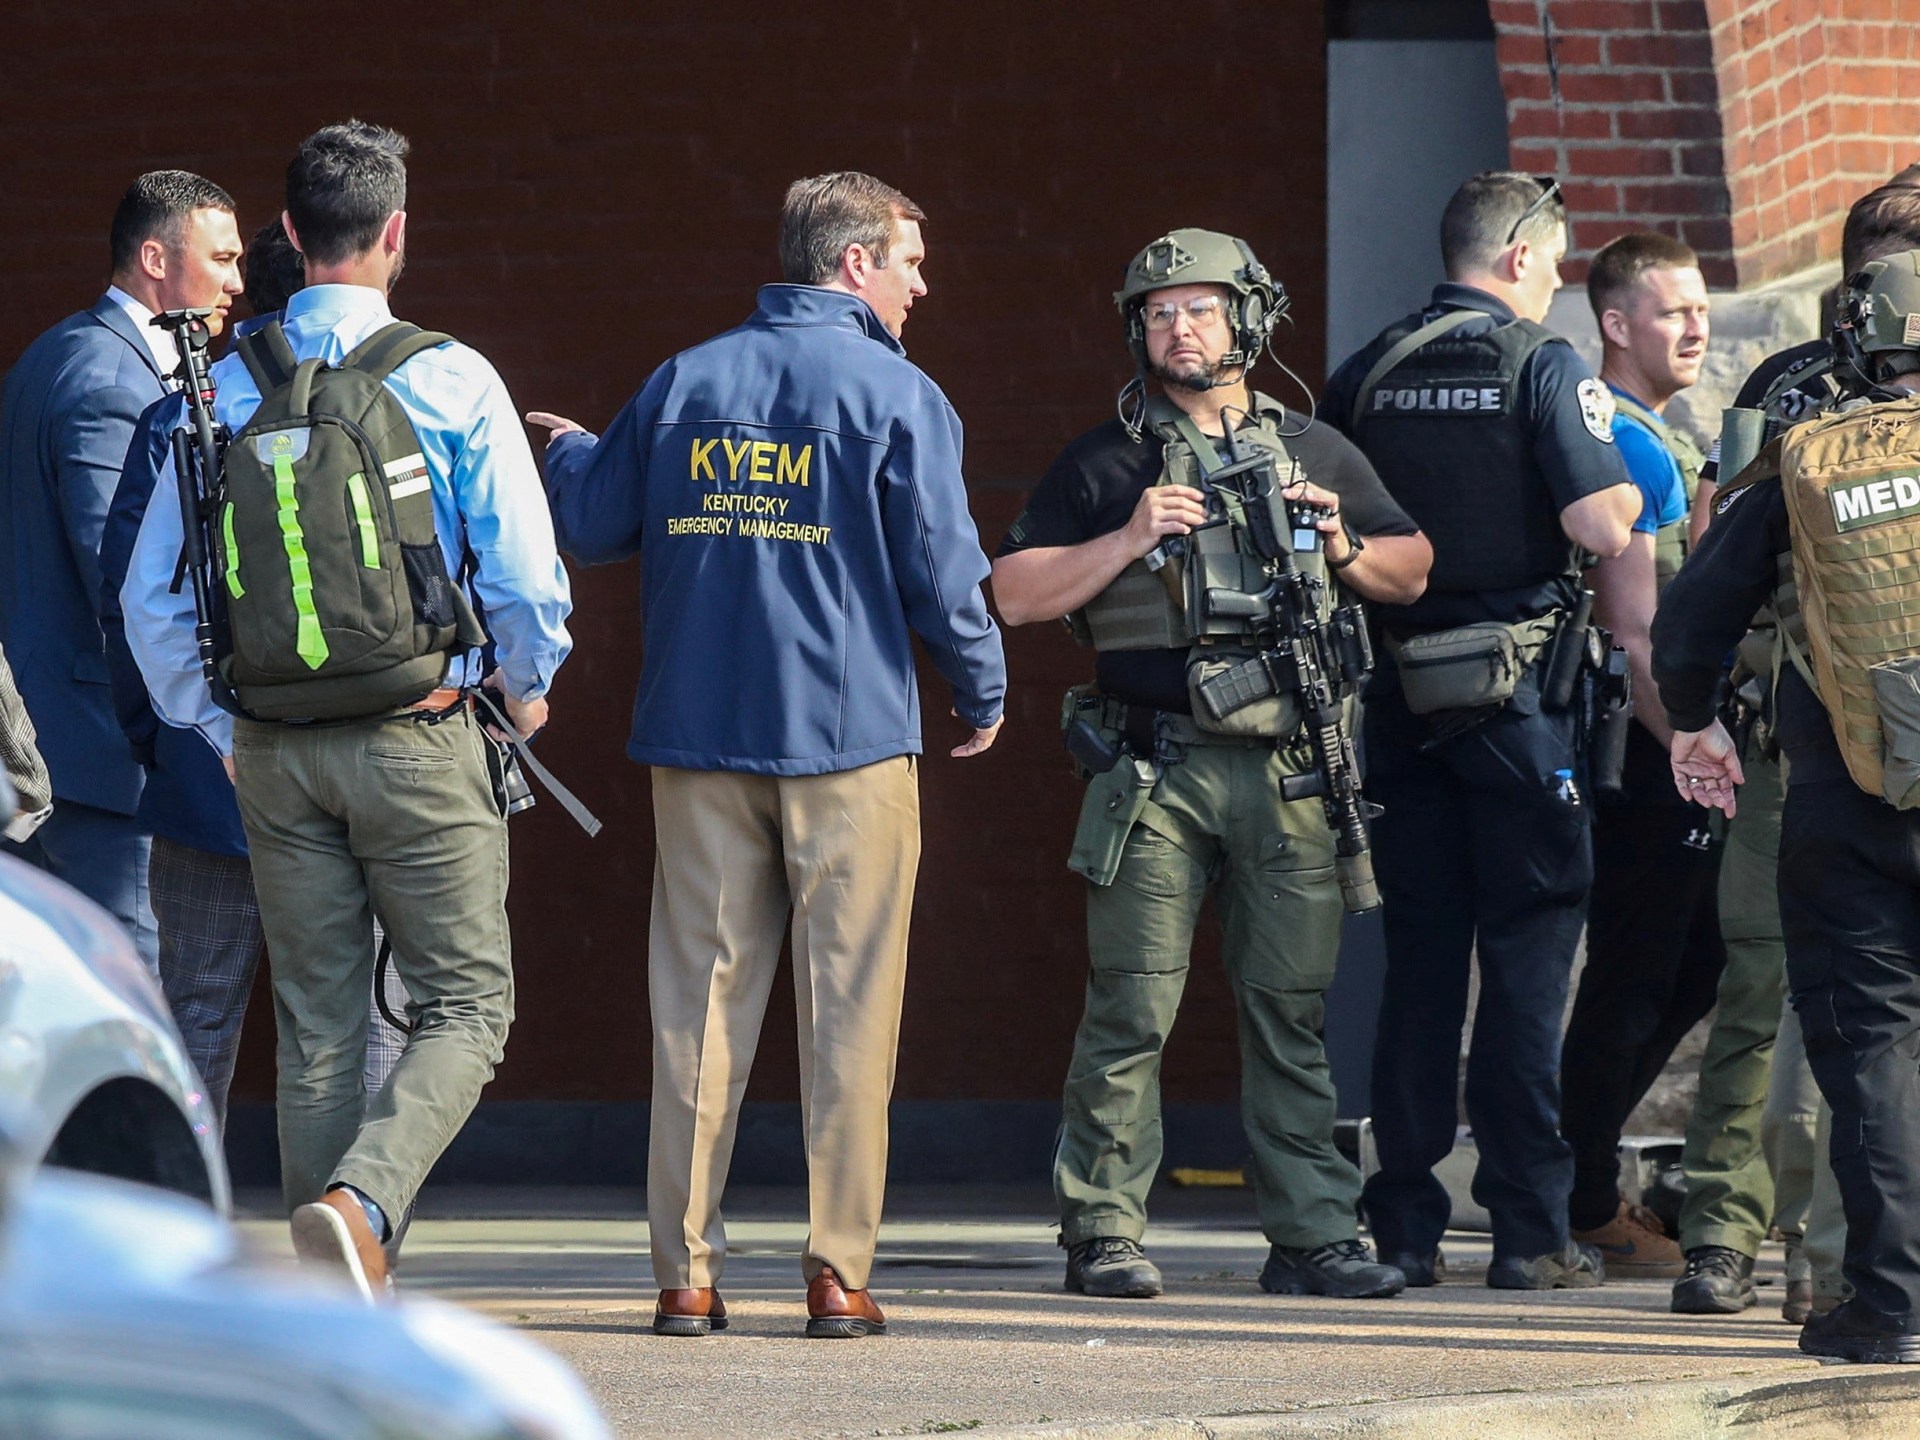 Penembak membunuh lima orang di bank di Louisville, Kentucky: Polisi |  Berita Kekerasan Senjata